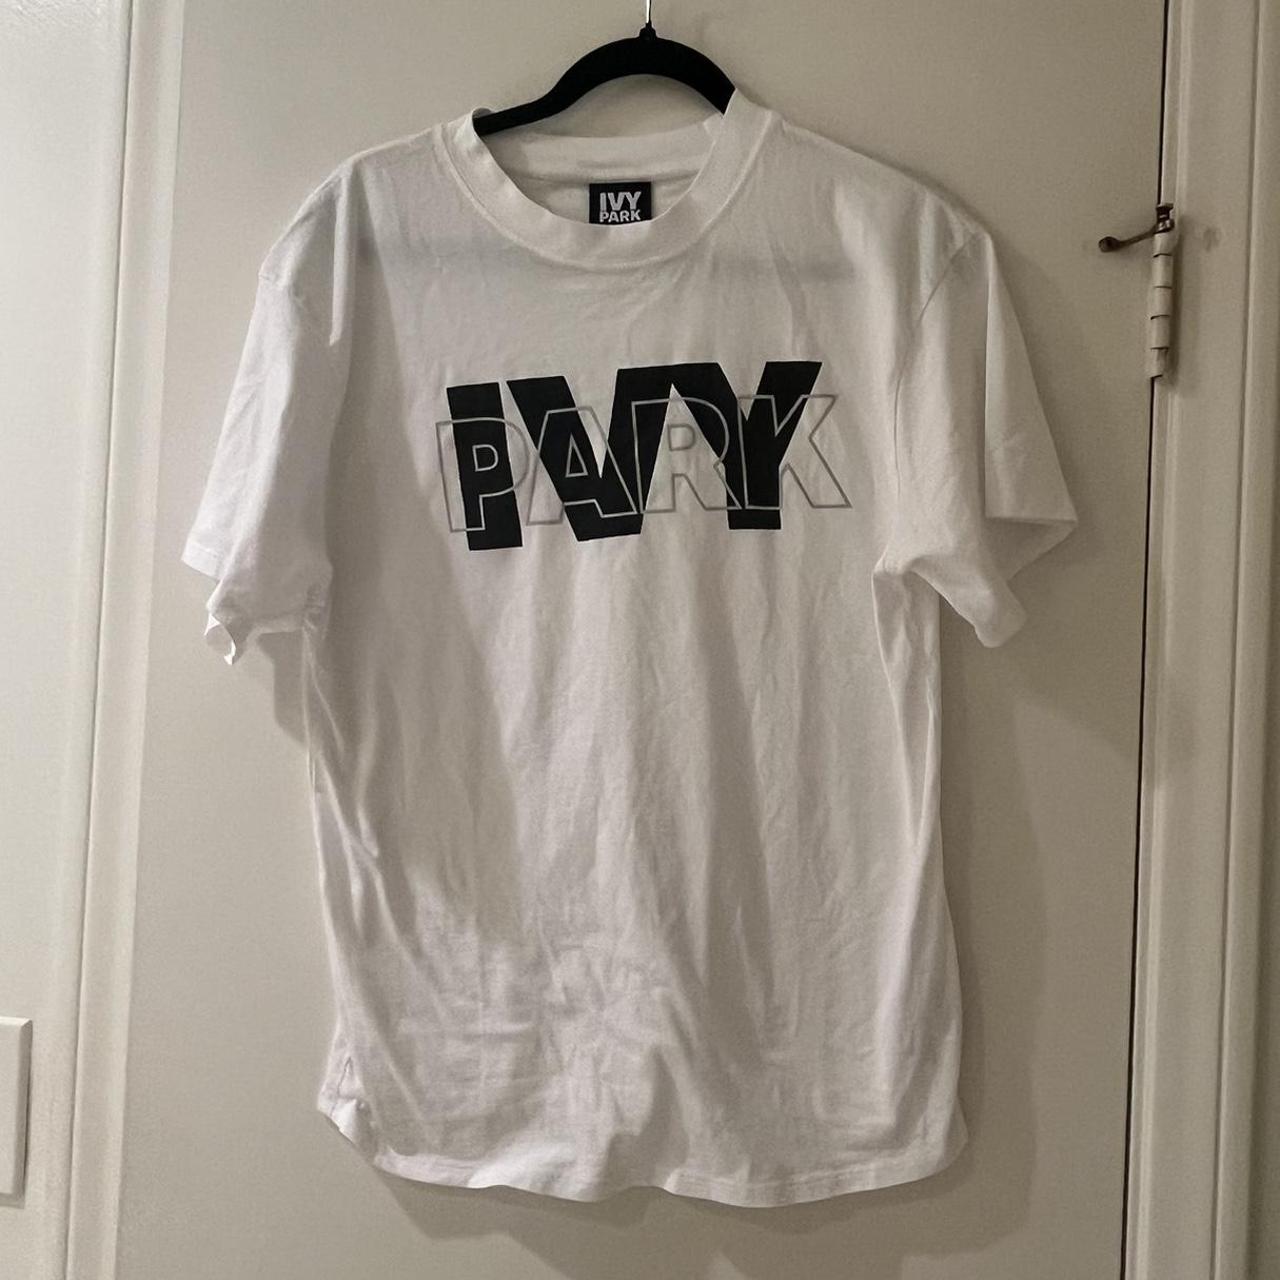 Ivy Park Men's White and Black T-shirt | Depop